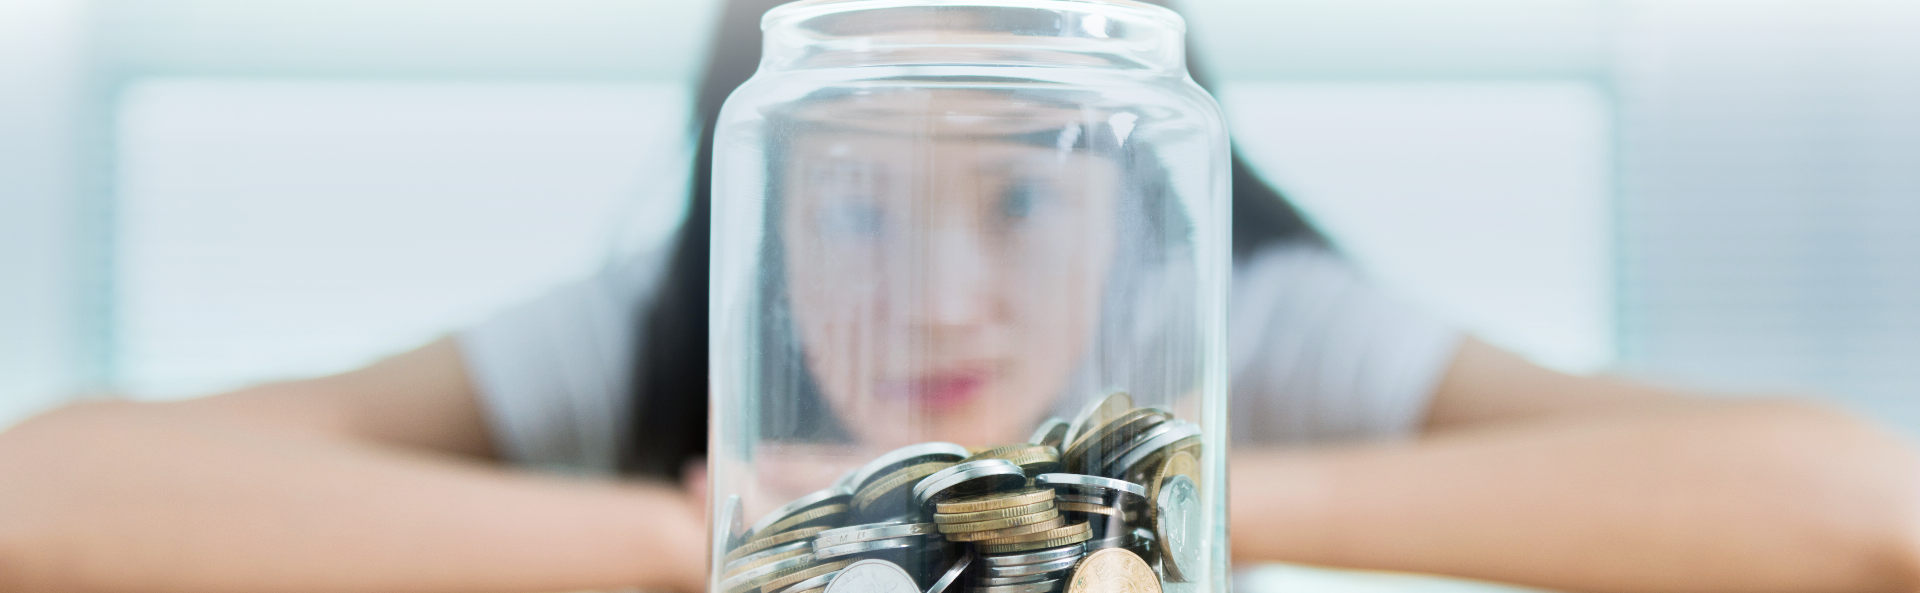 little girl saving money in a jar